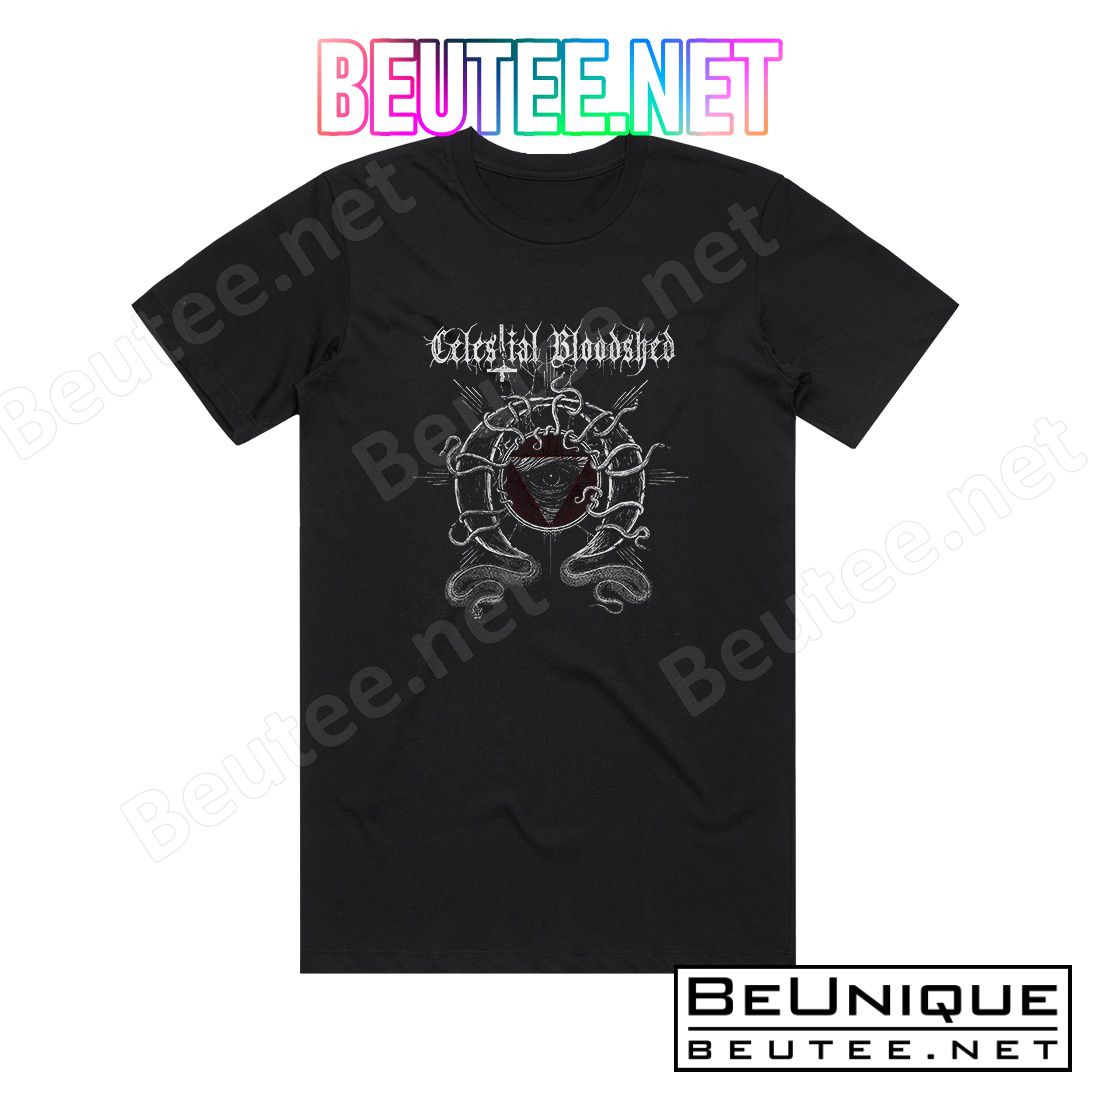 Celestial Bloodshed Omega Album Cover T-Shirt